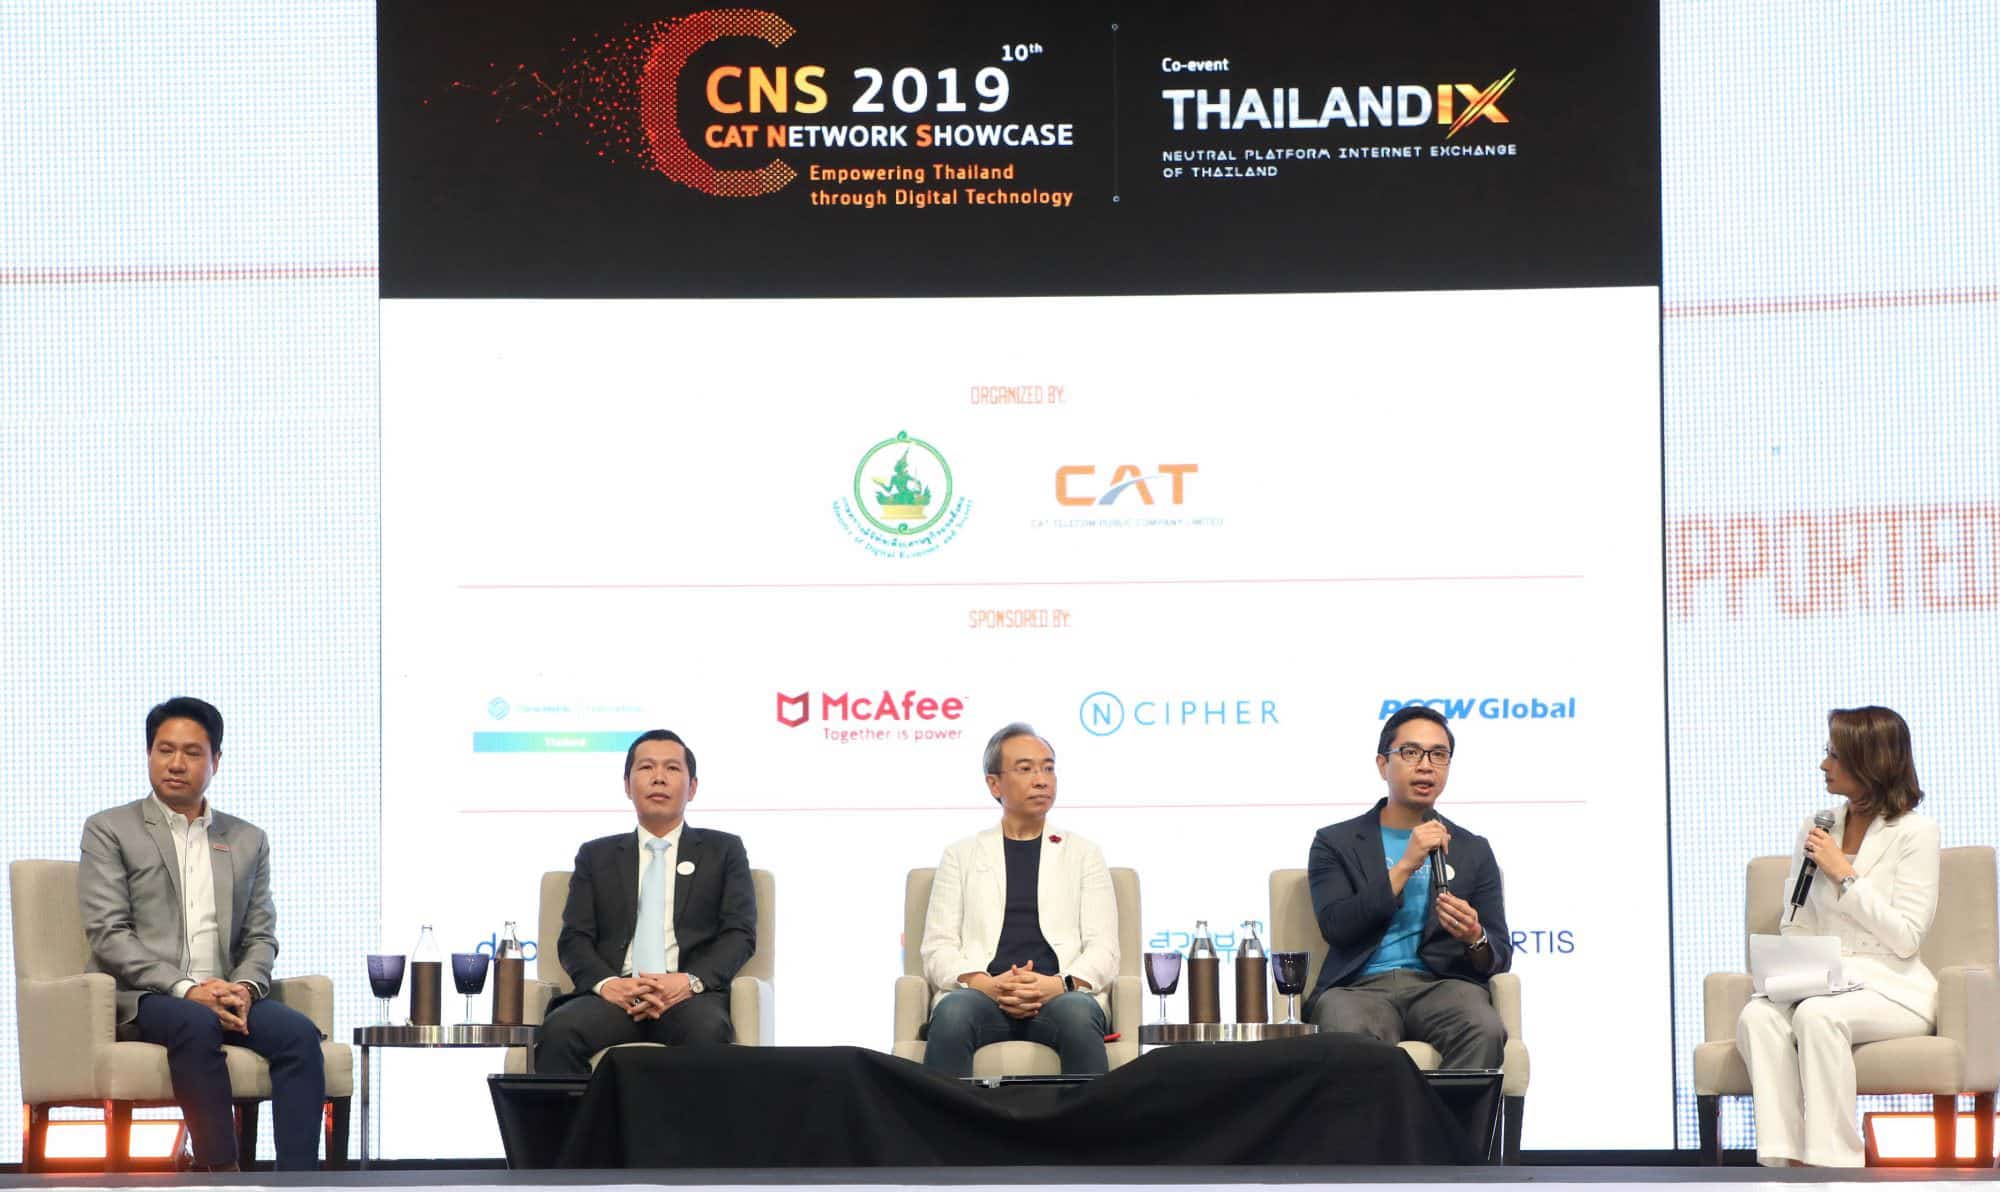 CAT เปิดเวทีเพิ่มศักยภาพประเทศไทยด้วยเทคโนโลยีดิจิทัล ดึงภาครัฐ-เอกชนร่วมแชร์มุมมองรับยุคดิจิทัลทรานส์ฟอร์ม 1